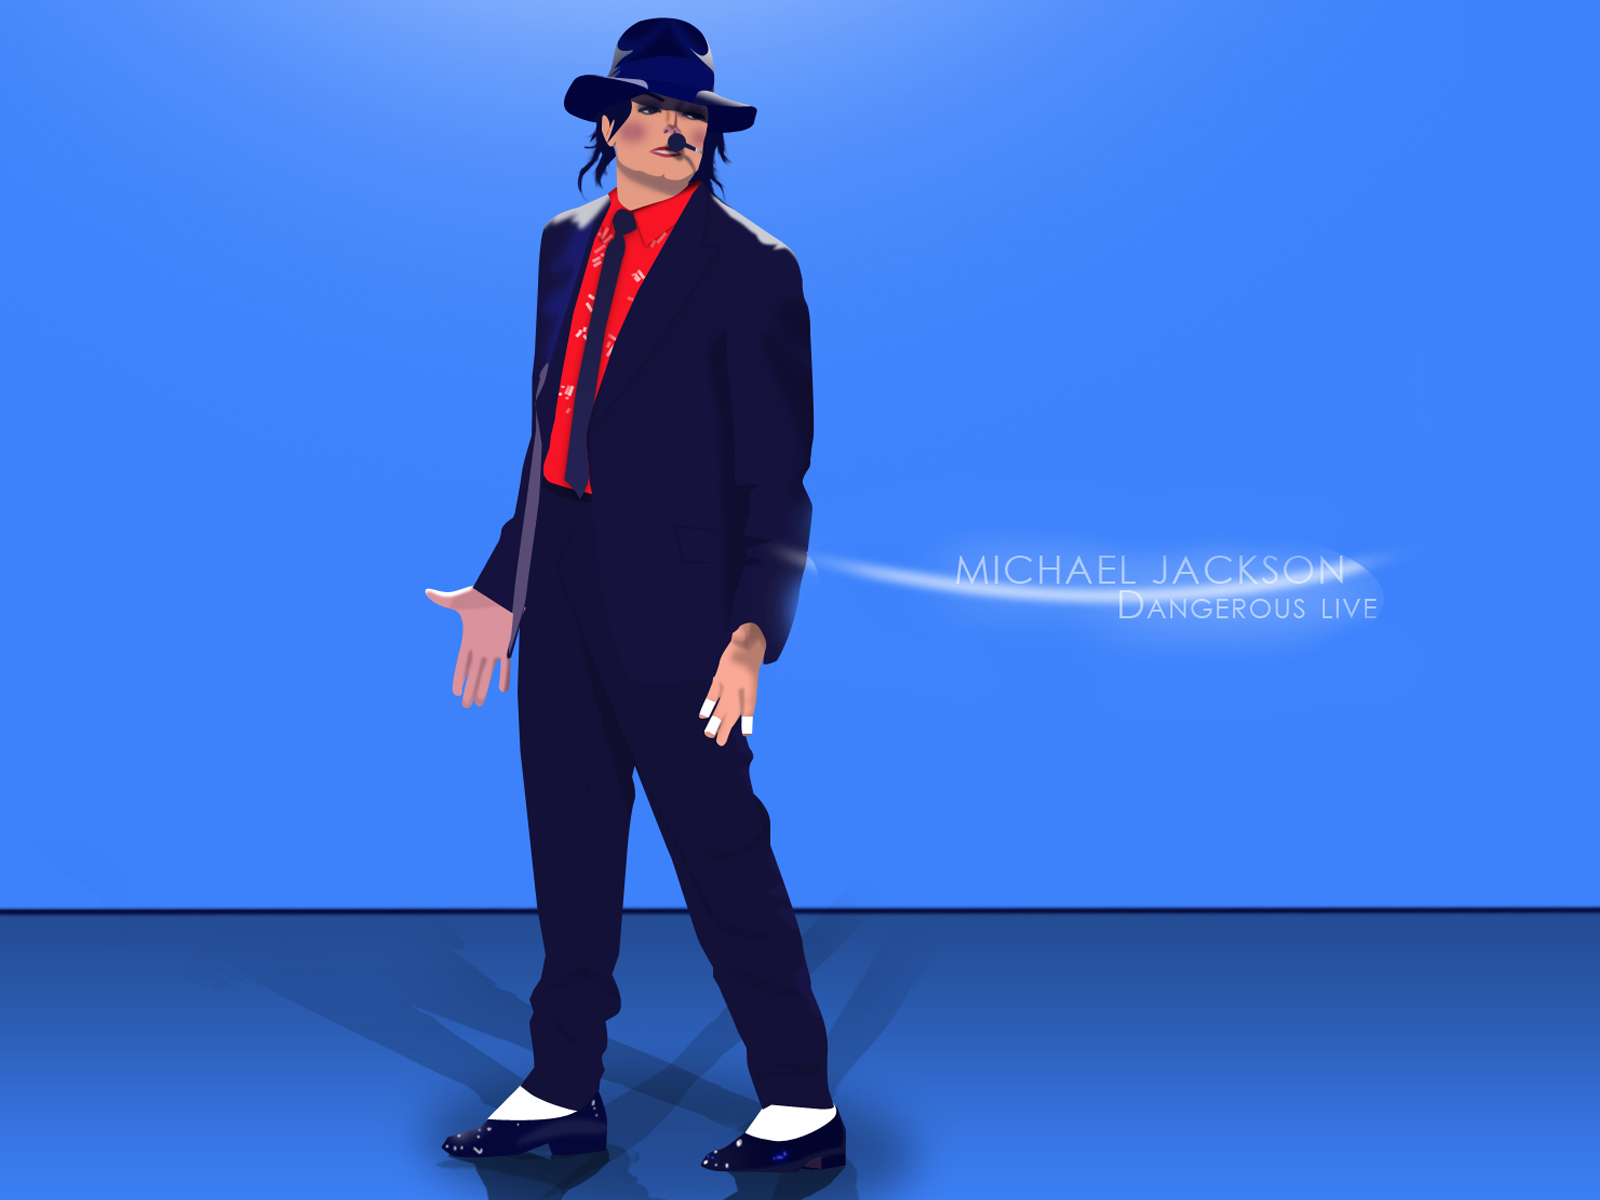 Michael Jackson Dangerous Live HD Wallpaper For Desktop